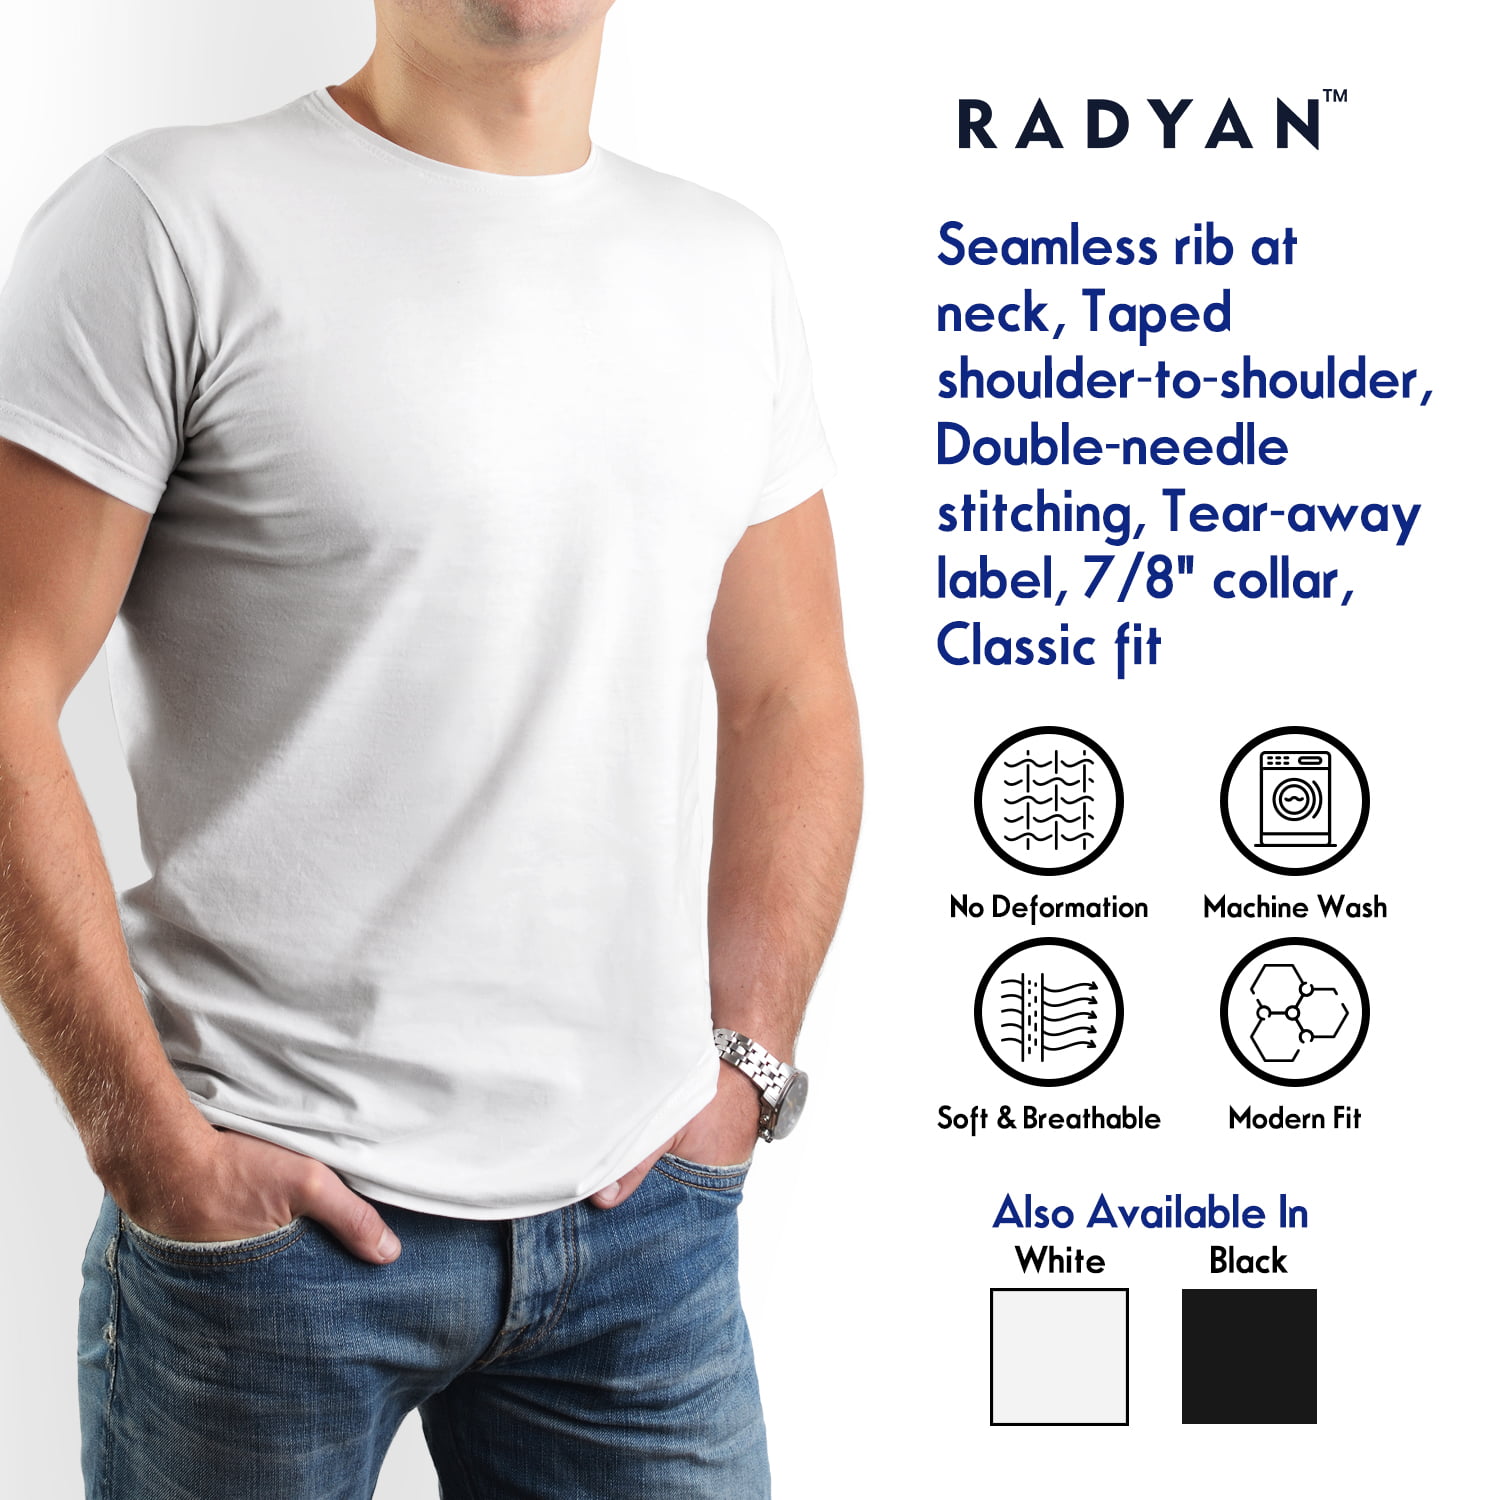 RADYAN Men's Plain Single Pack Ultra Cotton Soft Cool Short Sleeve